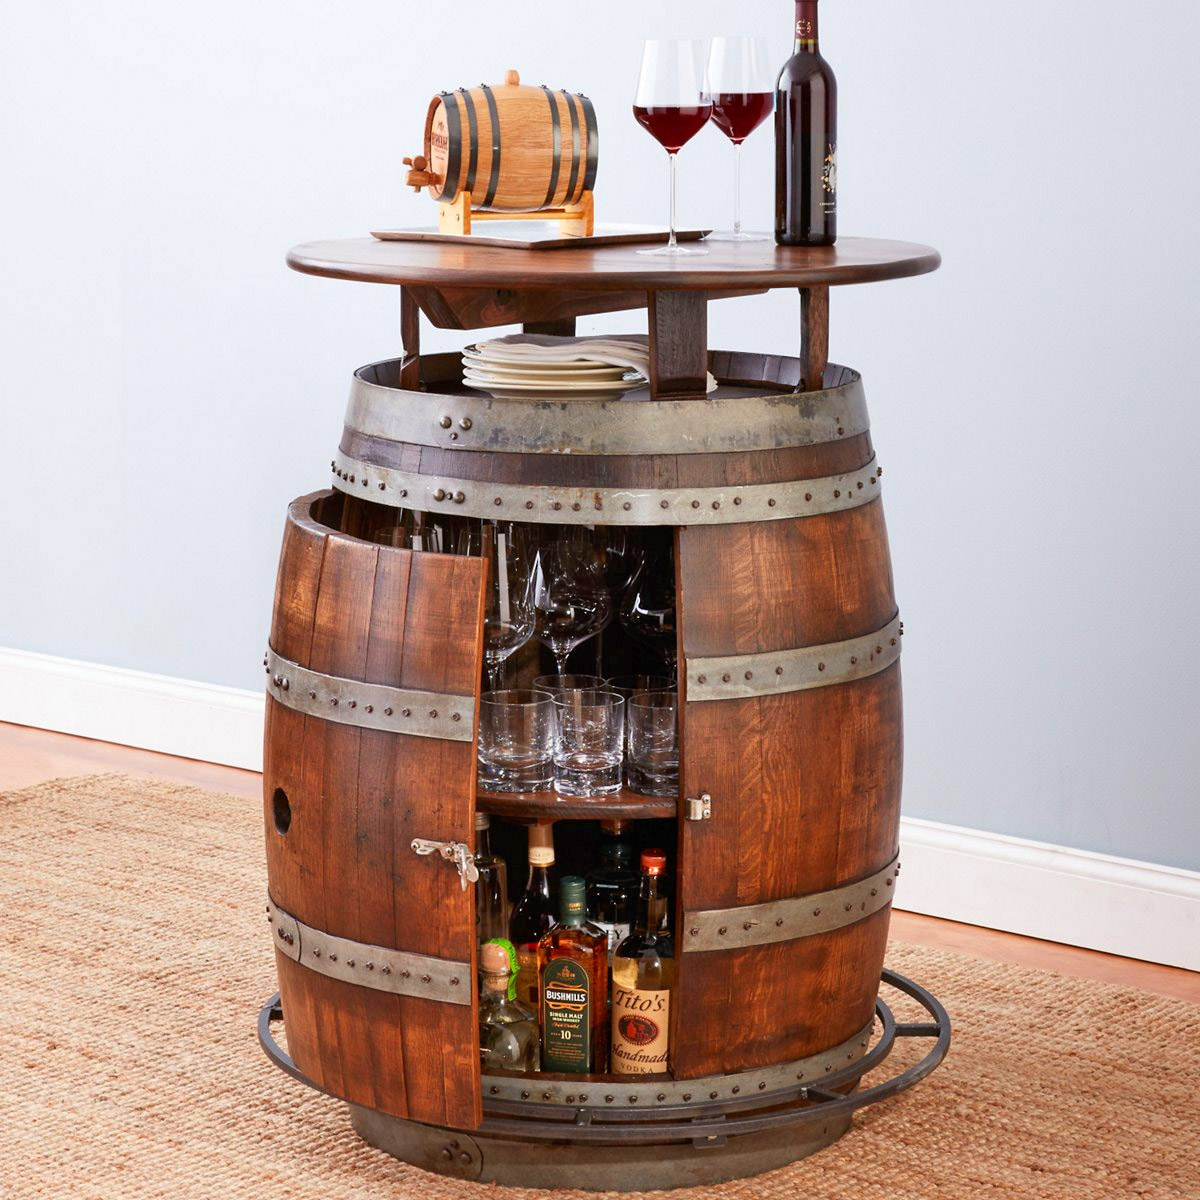 Ultimate Wine Barrel Table Has a Hidden Storage Inside